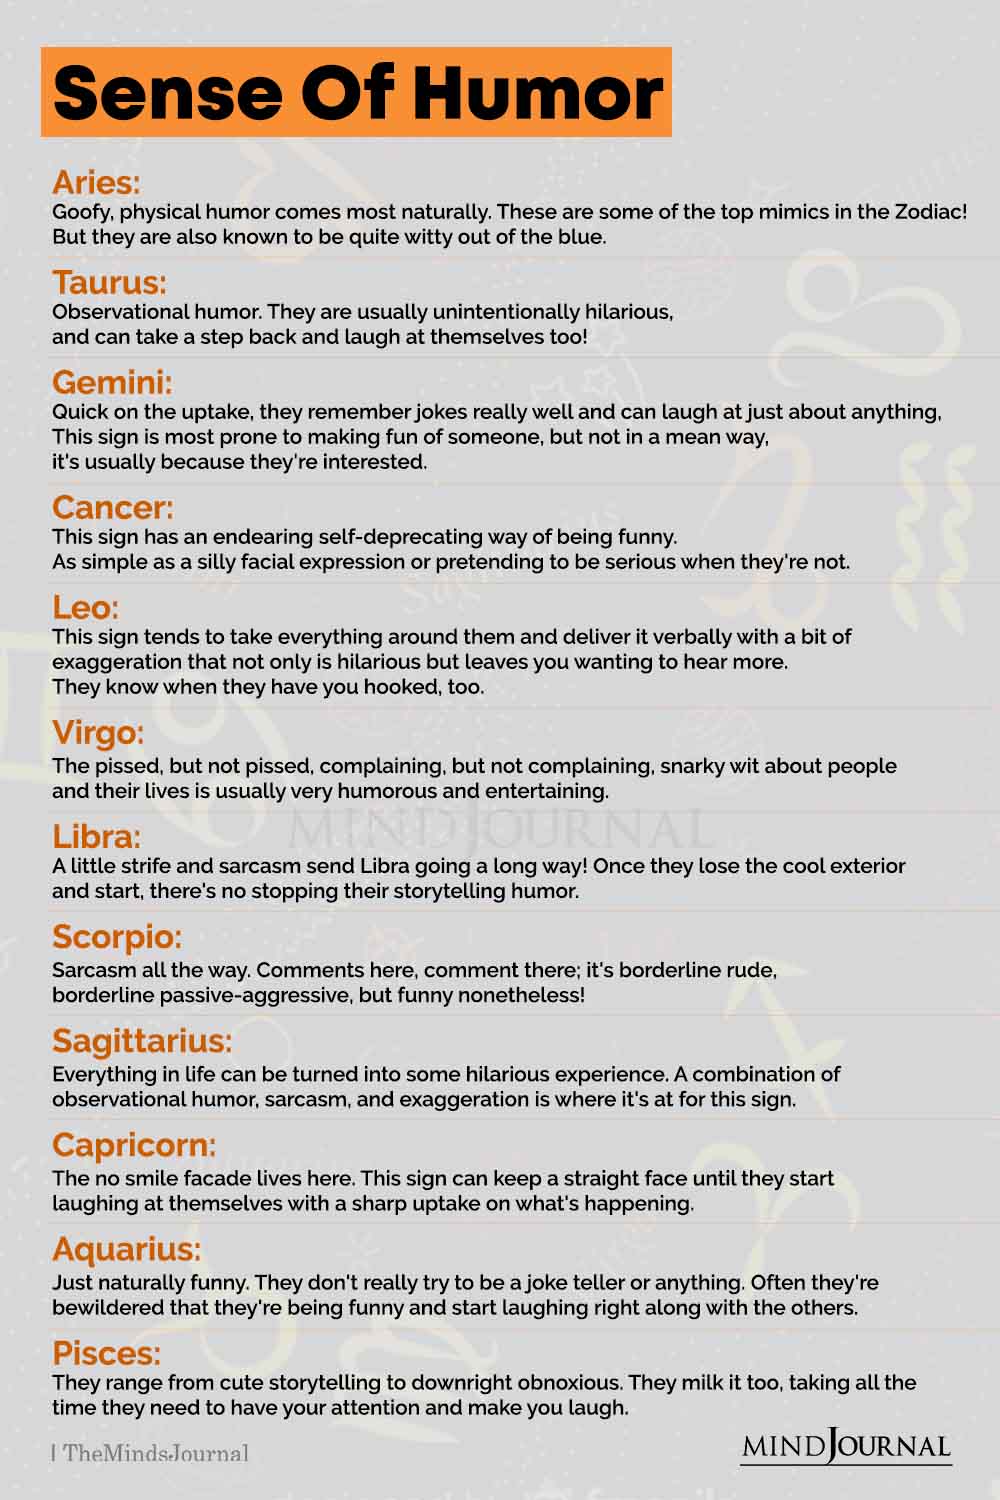 Sense of Humor of The 12 Zodiac Signs